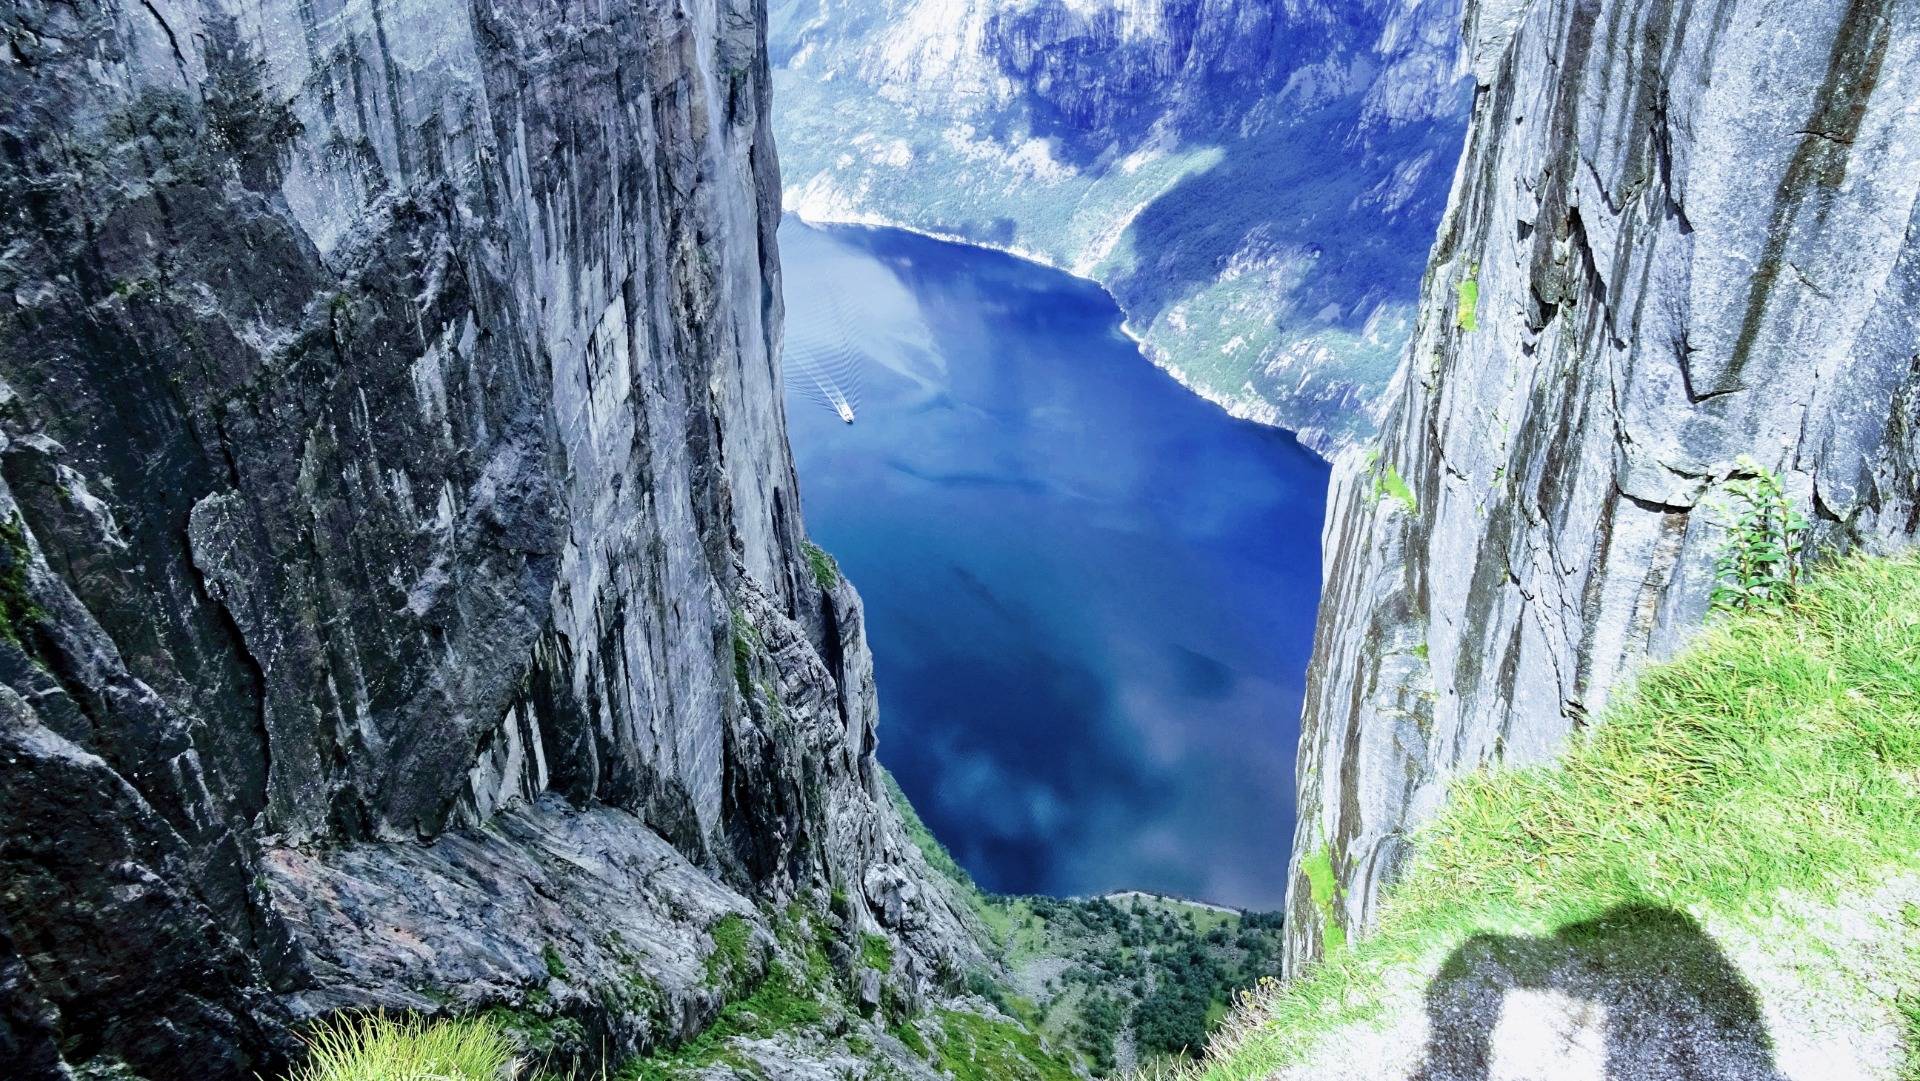 Lysefjord: Trekking over blue water